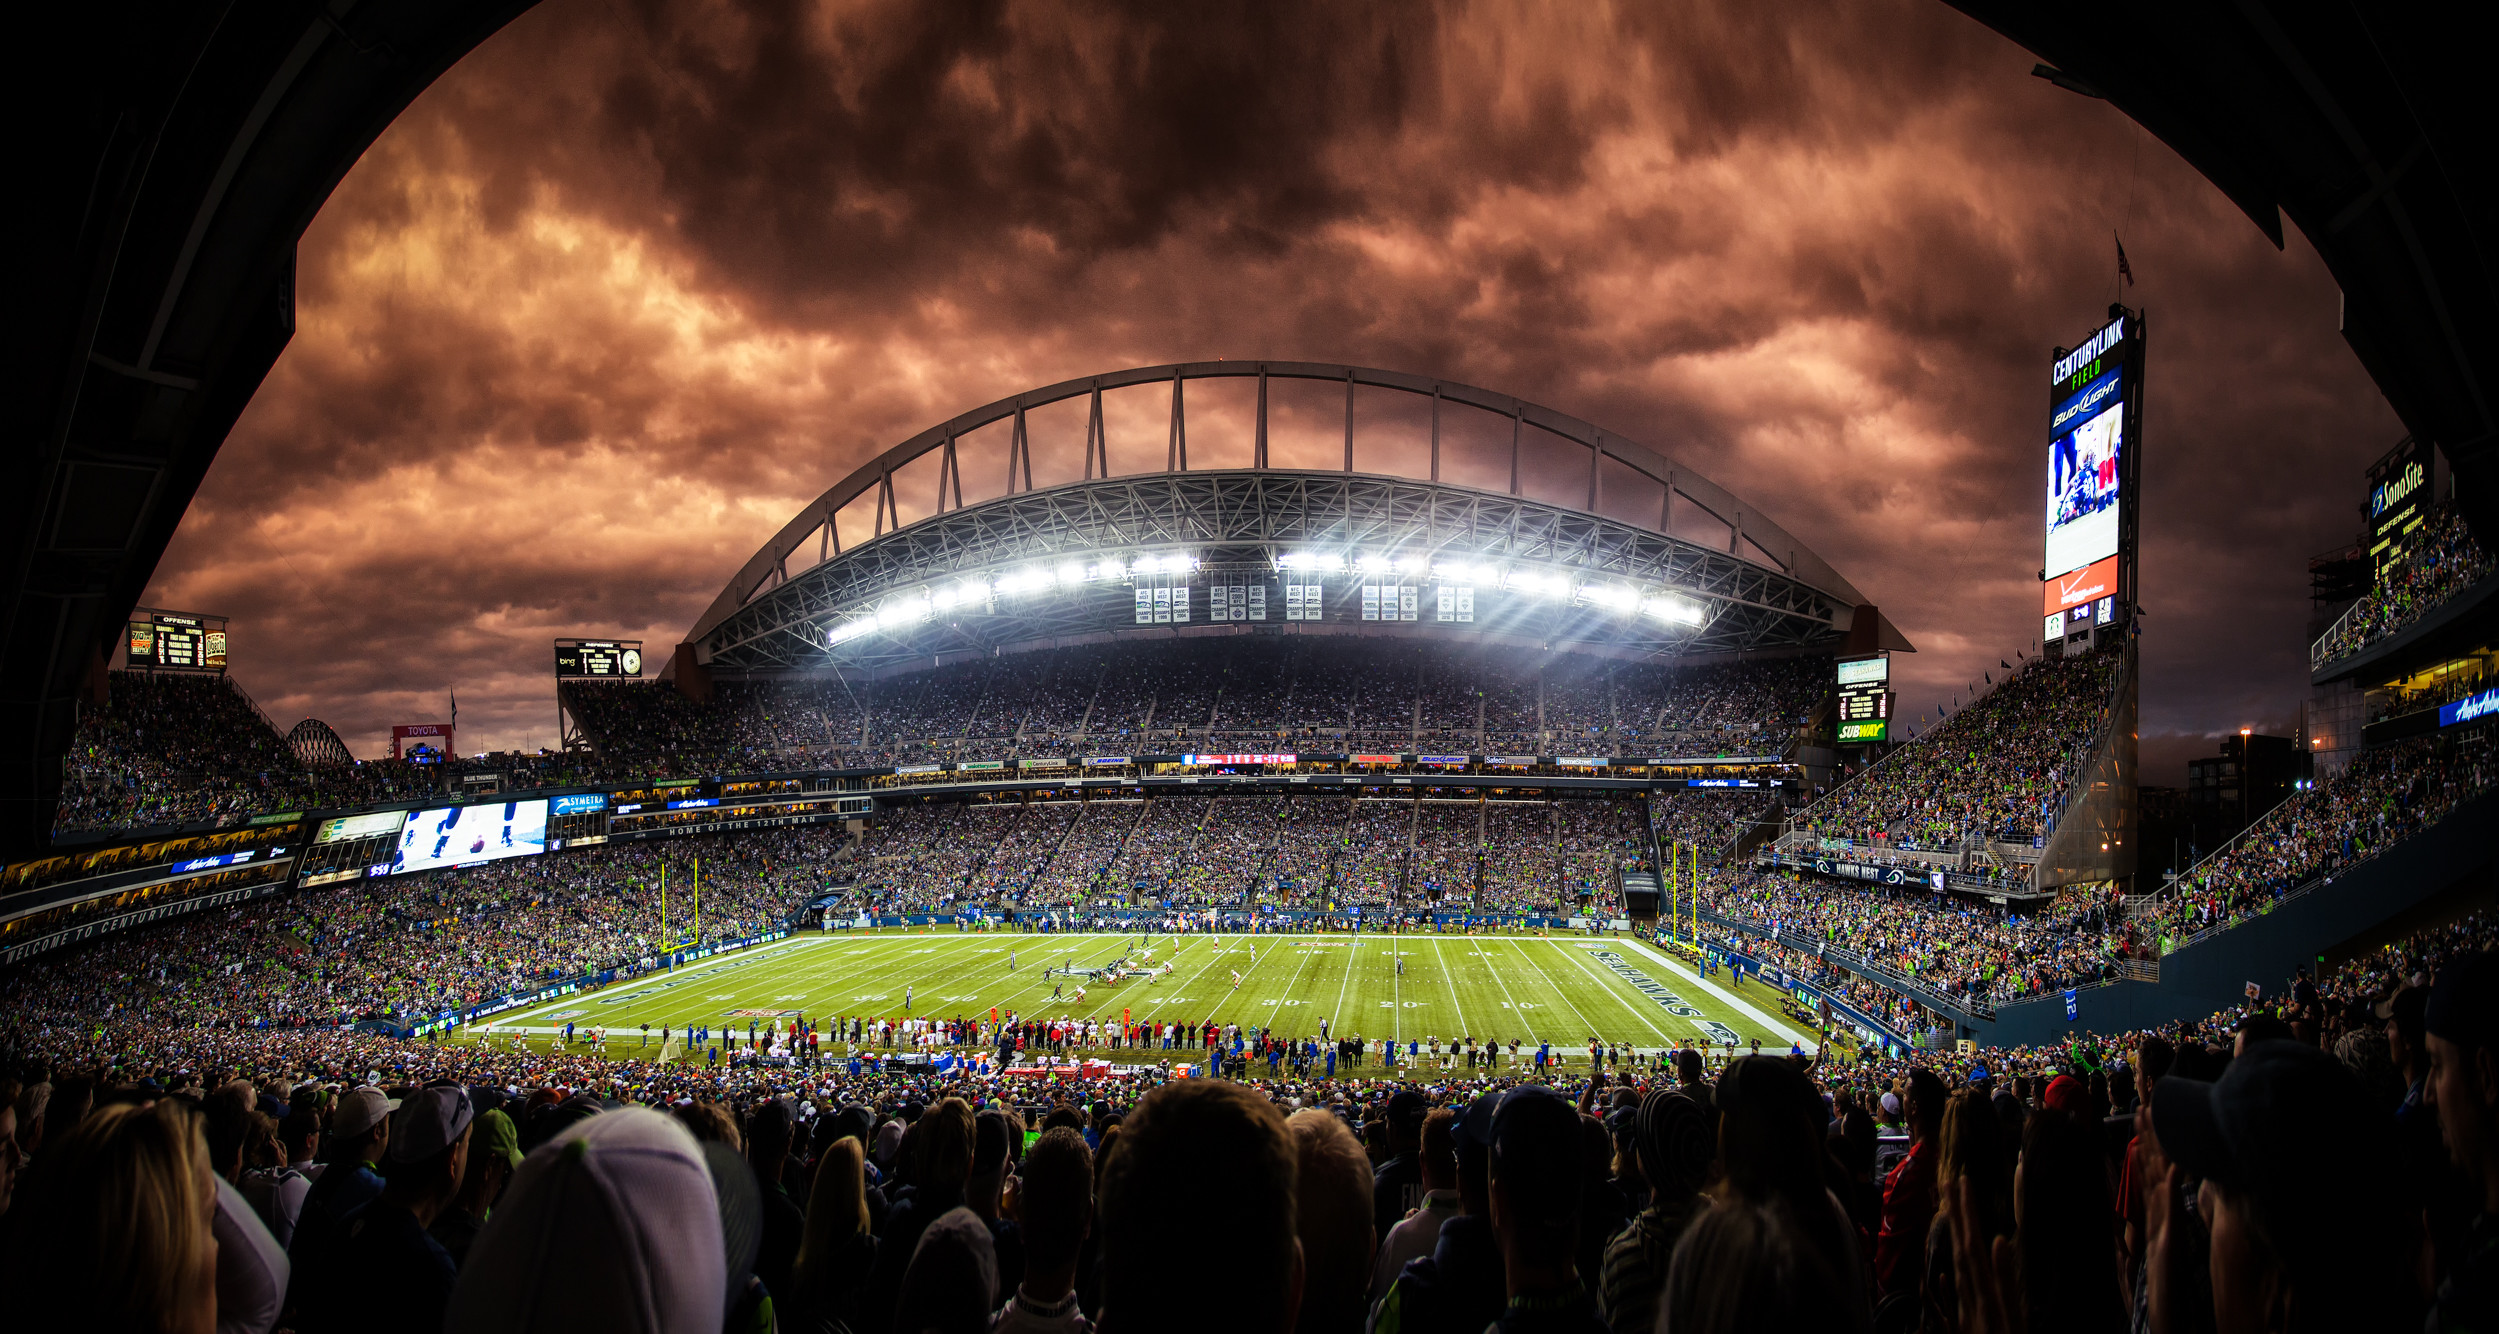 2013 Seattle Seahawks nfl football Qwest stadium g wallpaper .